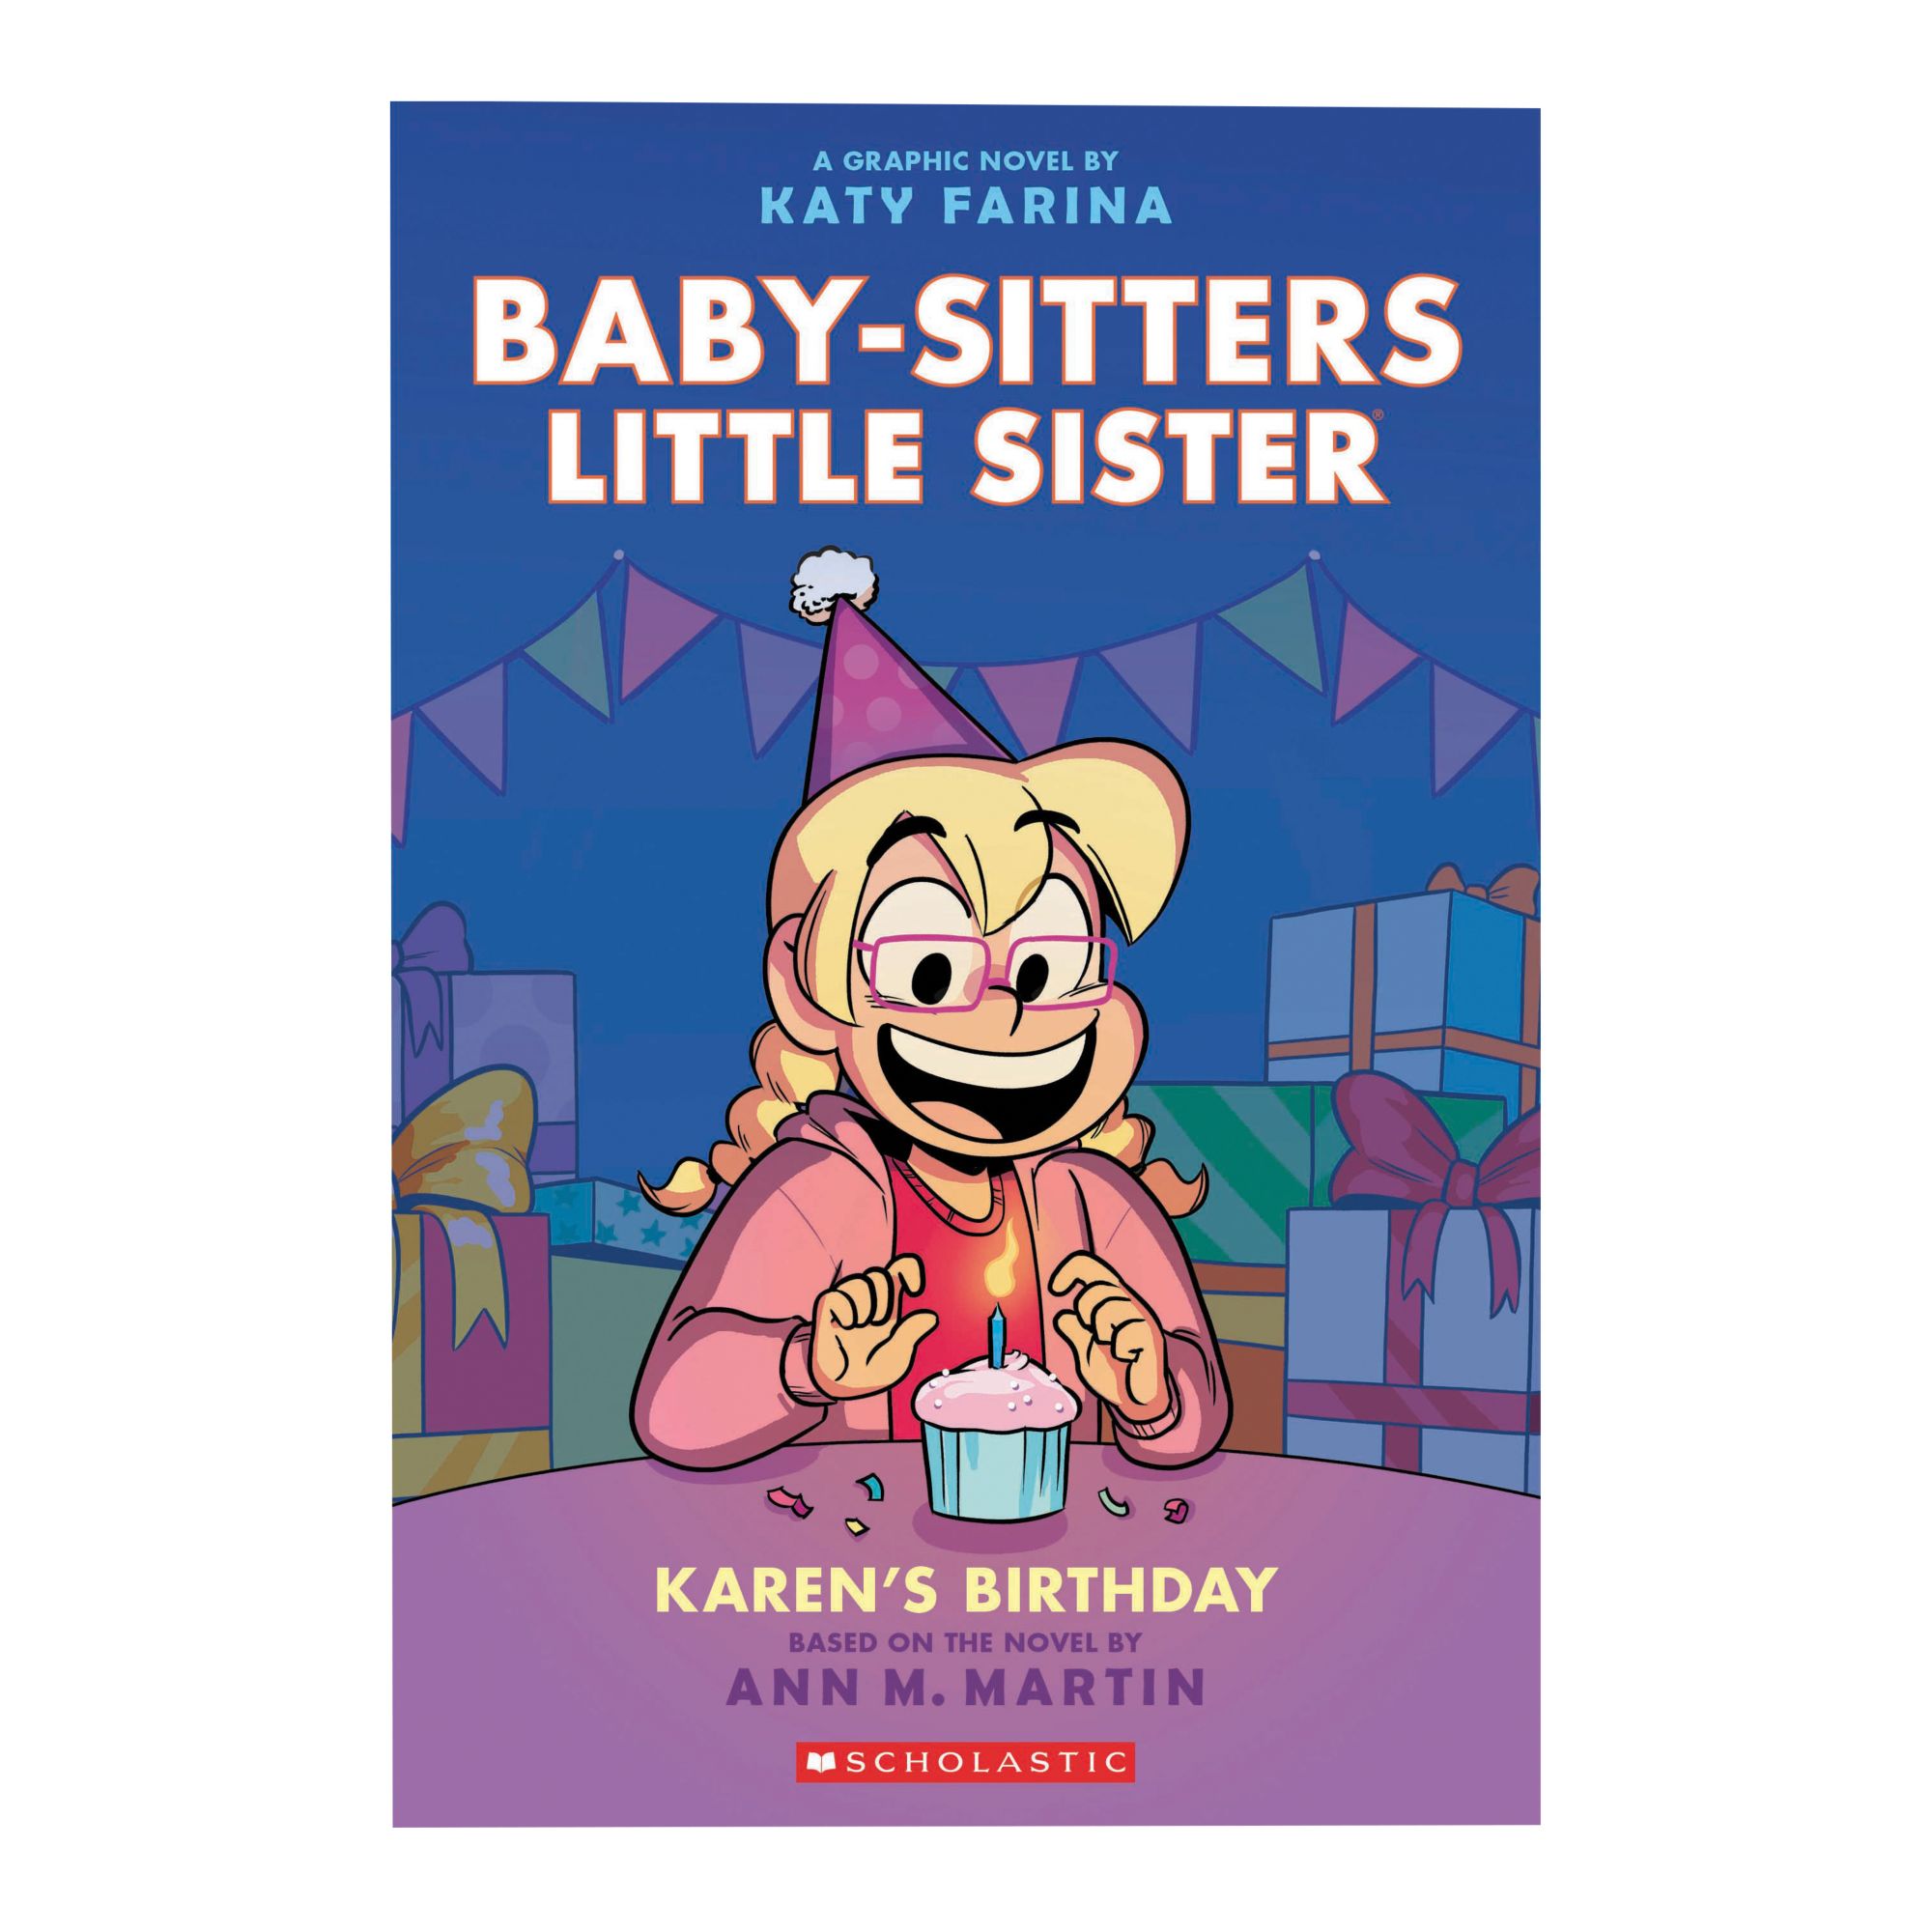 Karen's Birthday: A Graphic Novel (Baby-sitters Little Sister #6) - BJs Wholesale Club